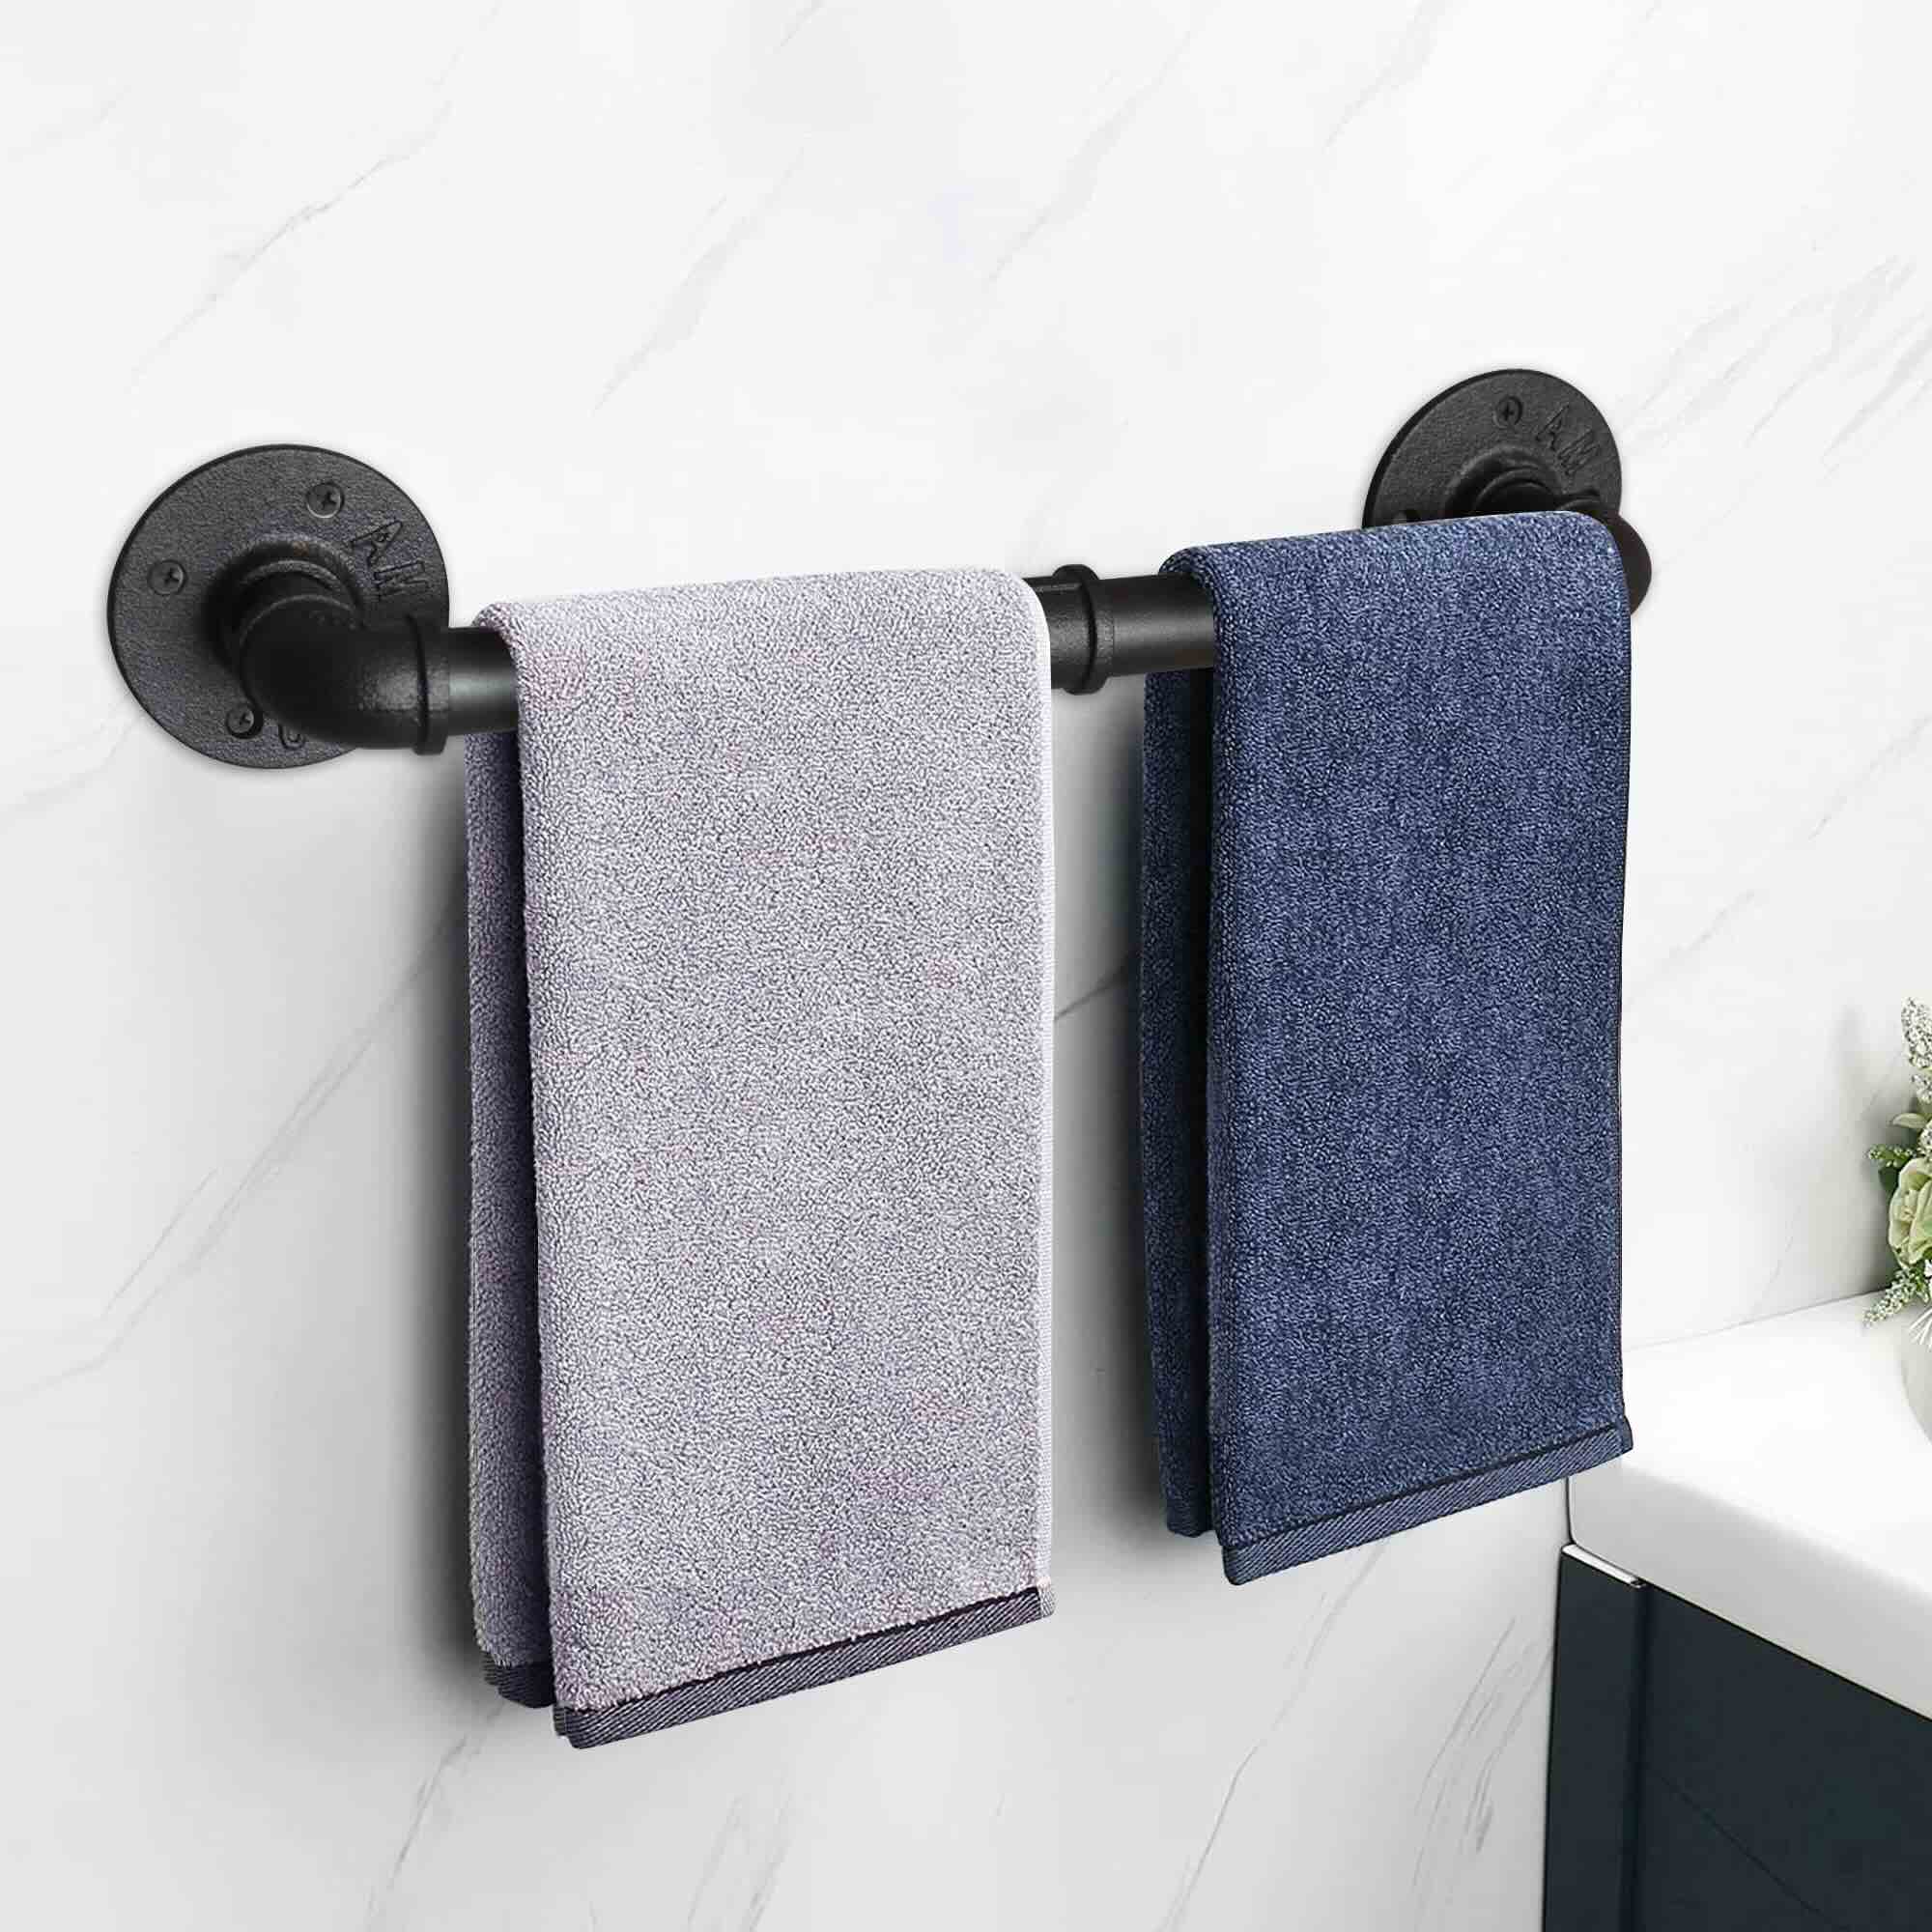 MyGift Wall Mounted Industrial Black Metal Bathroom Hardware Hand Towel Rack with 12.5 inch Pipe Design, Single Bar Towel Holder